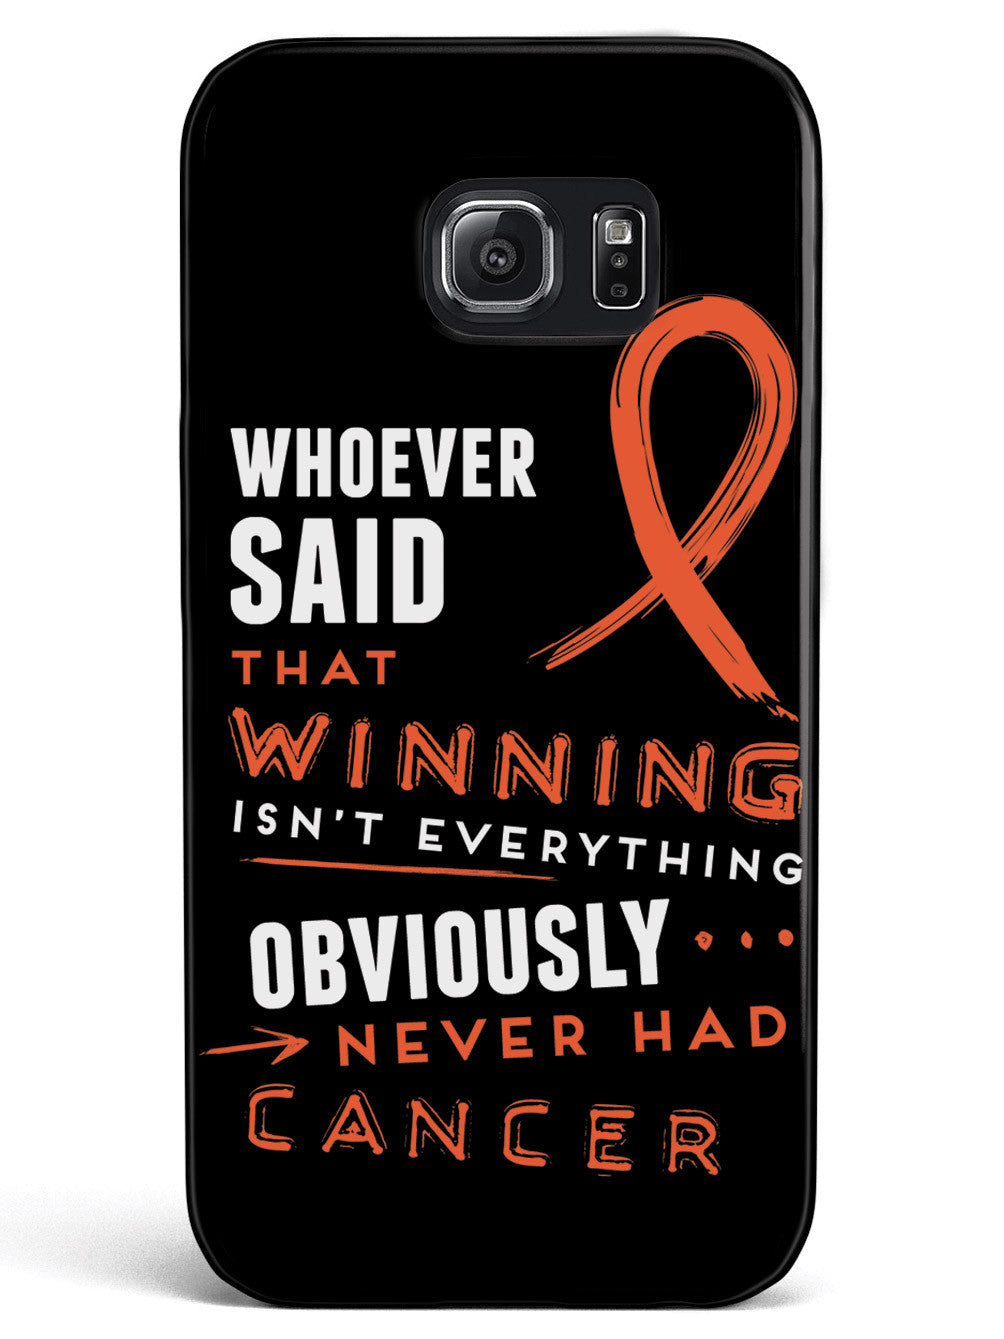 Winning is Everything - Cancer Awareness Orange Case